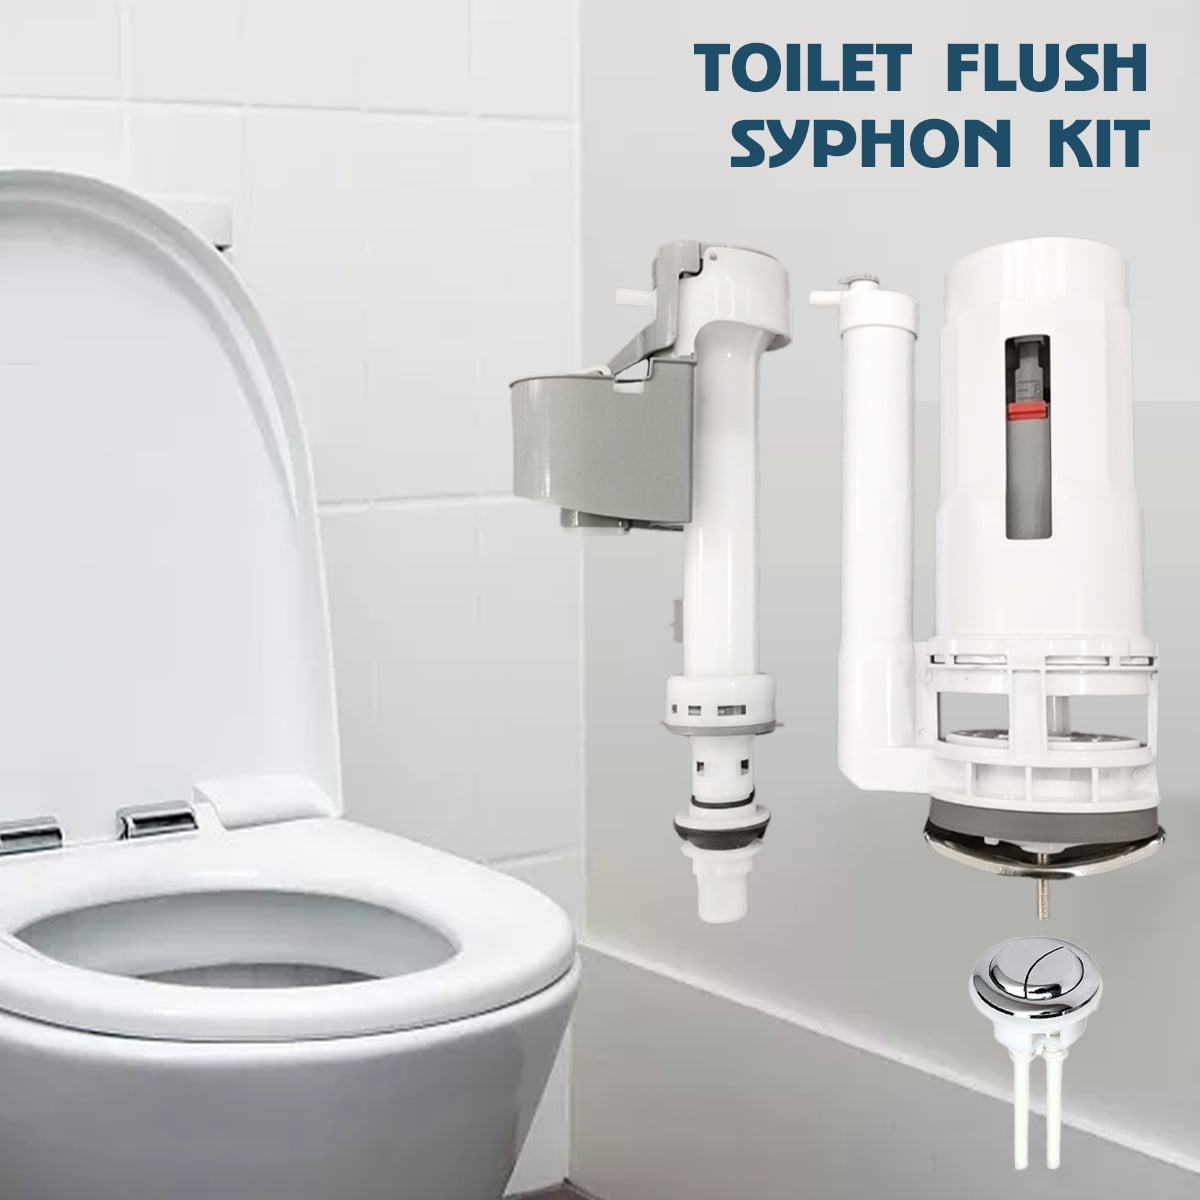 Details about   Replacement Toilet Fill Valve Water Drain Flush Valve Dual Button Kits #H 